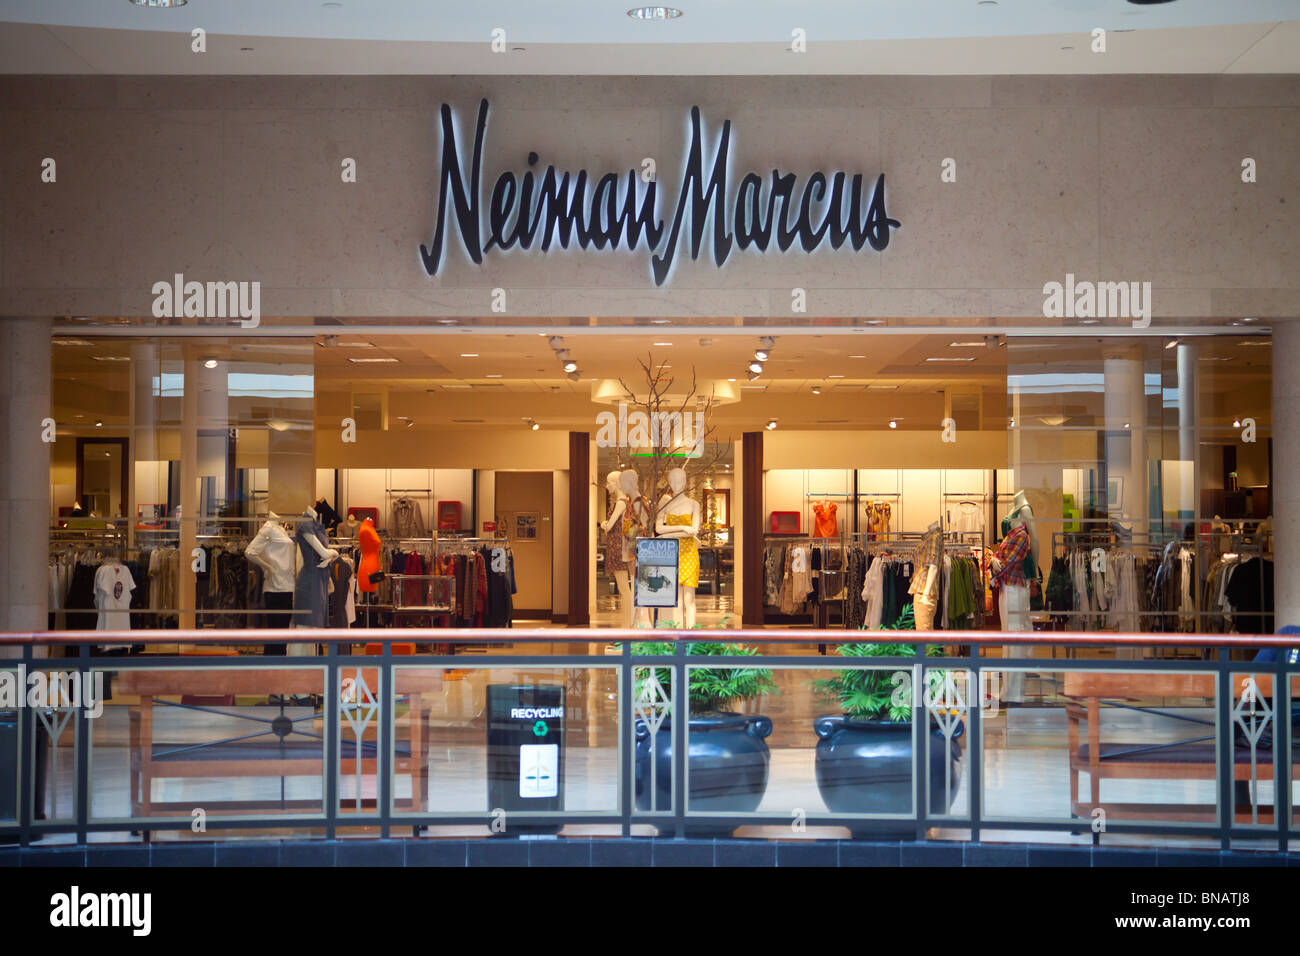 Neiman Marcus department store, King of Prussia Mall, près de Philadelphie, PA, USA Banque D'Images